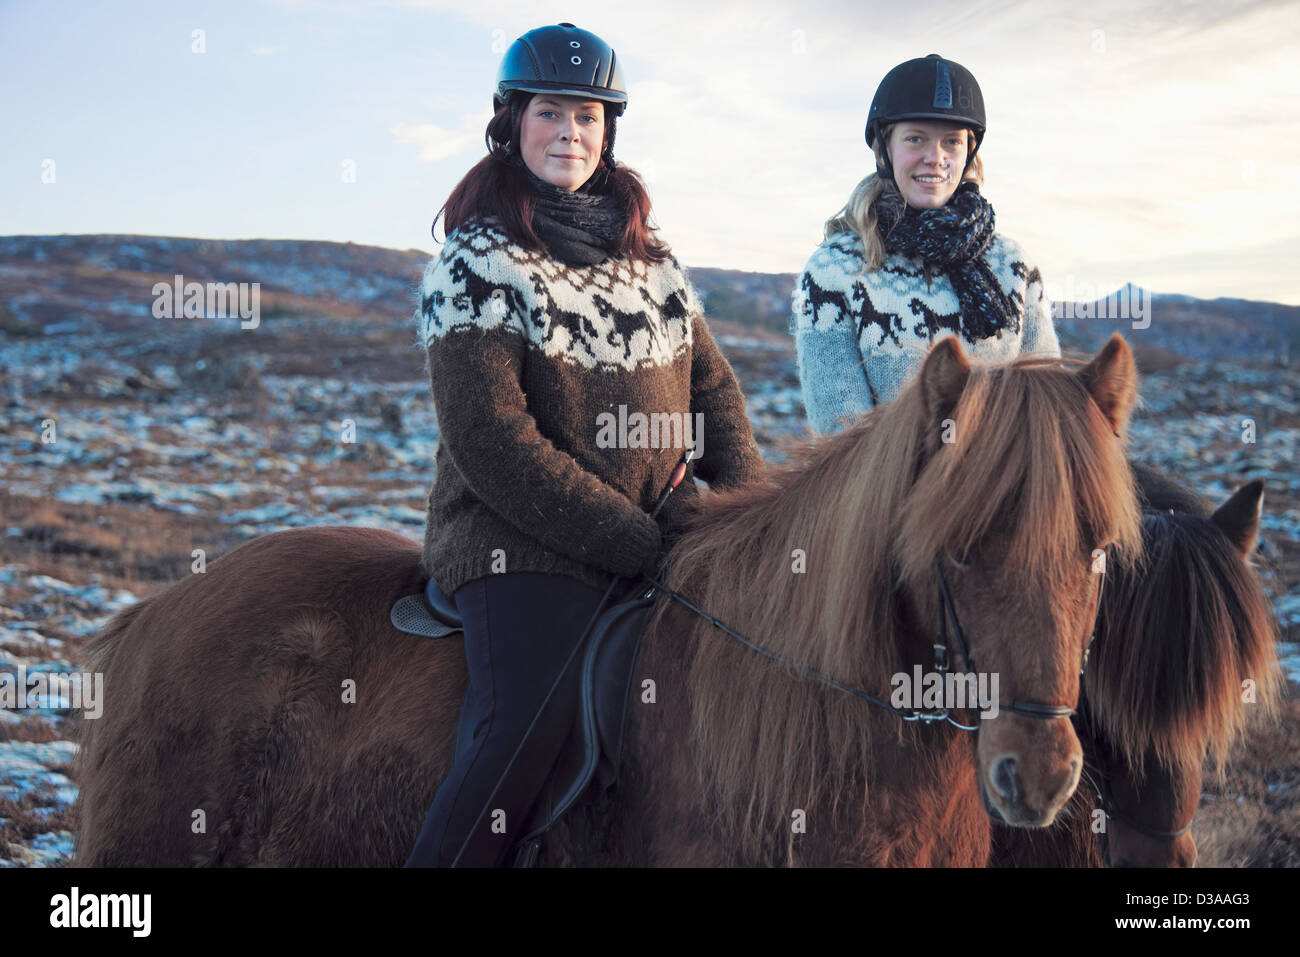 Women riding horses outdoors Stock Photo